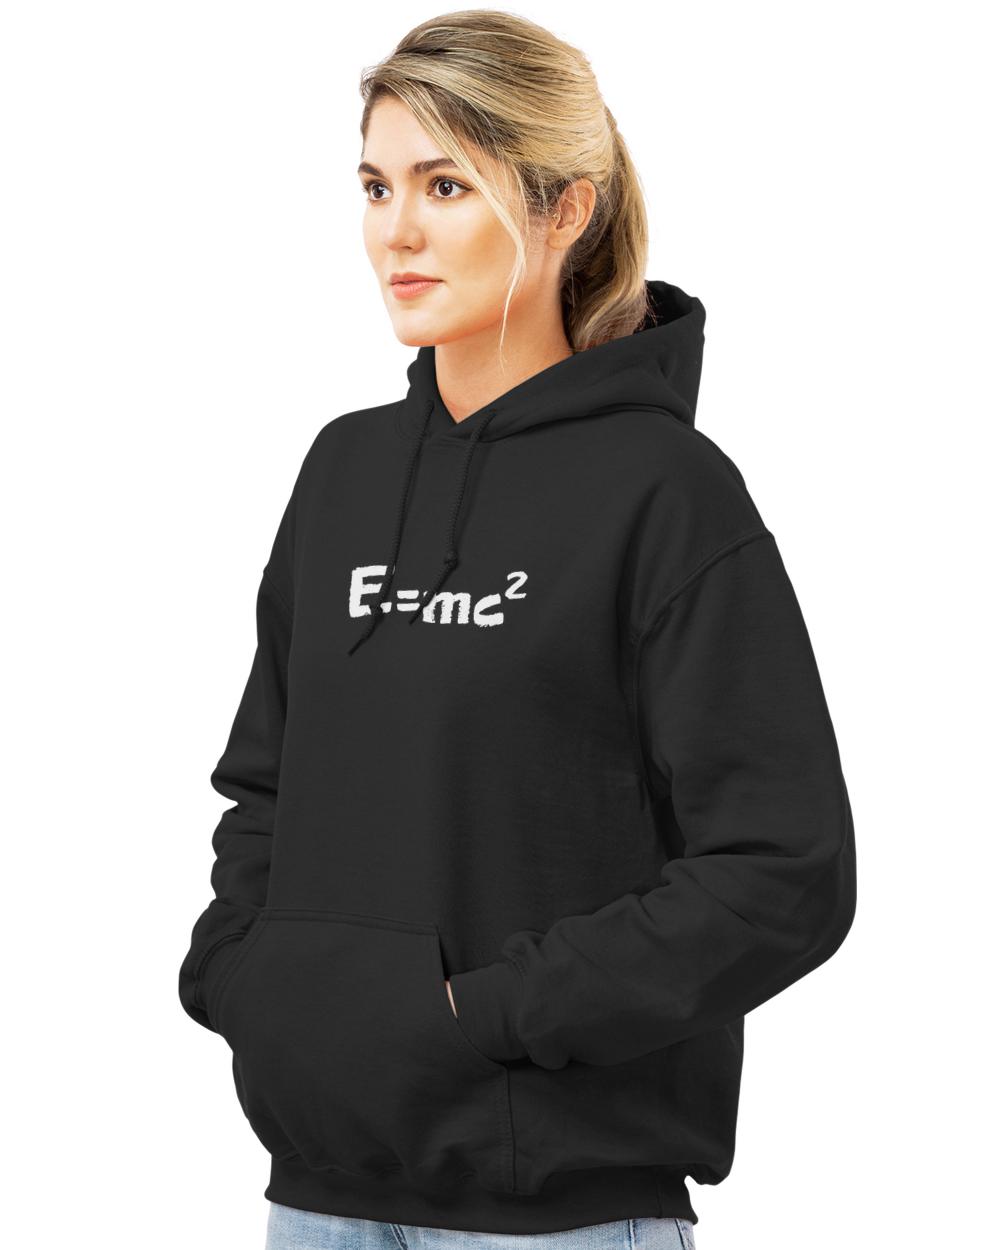 E mc2 energy formula science physics lover gifts chalk writing equitation 19138 T-Shirt